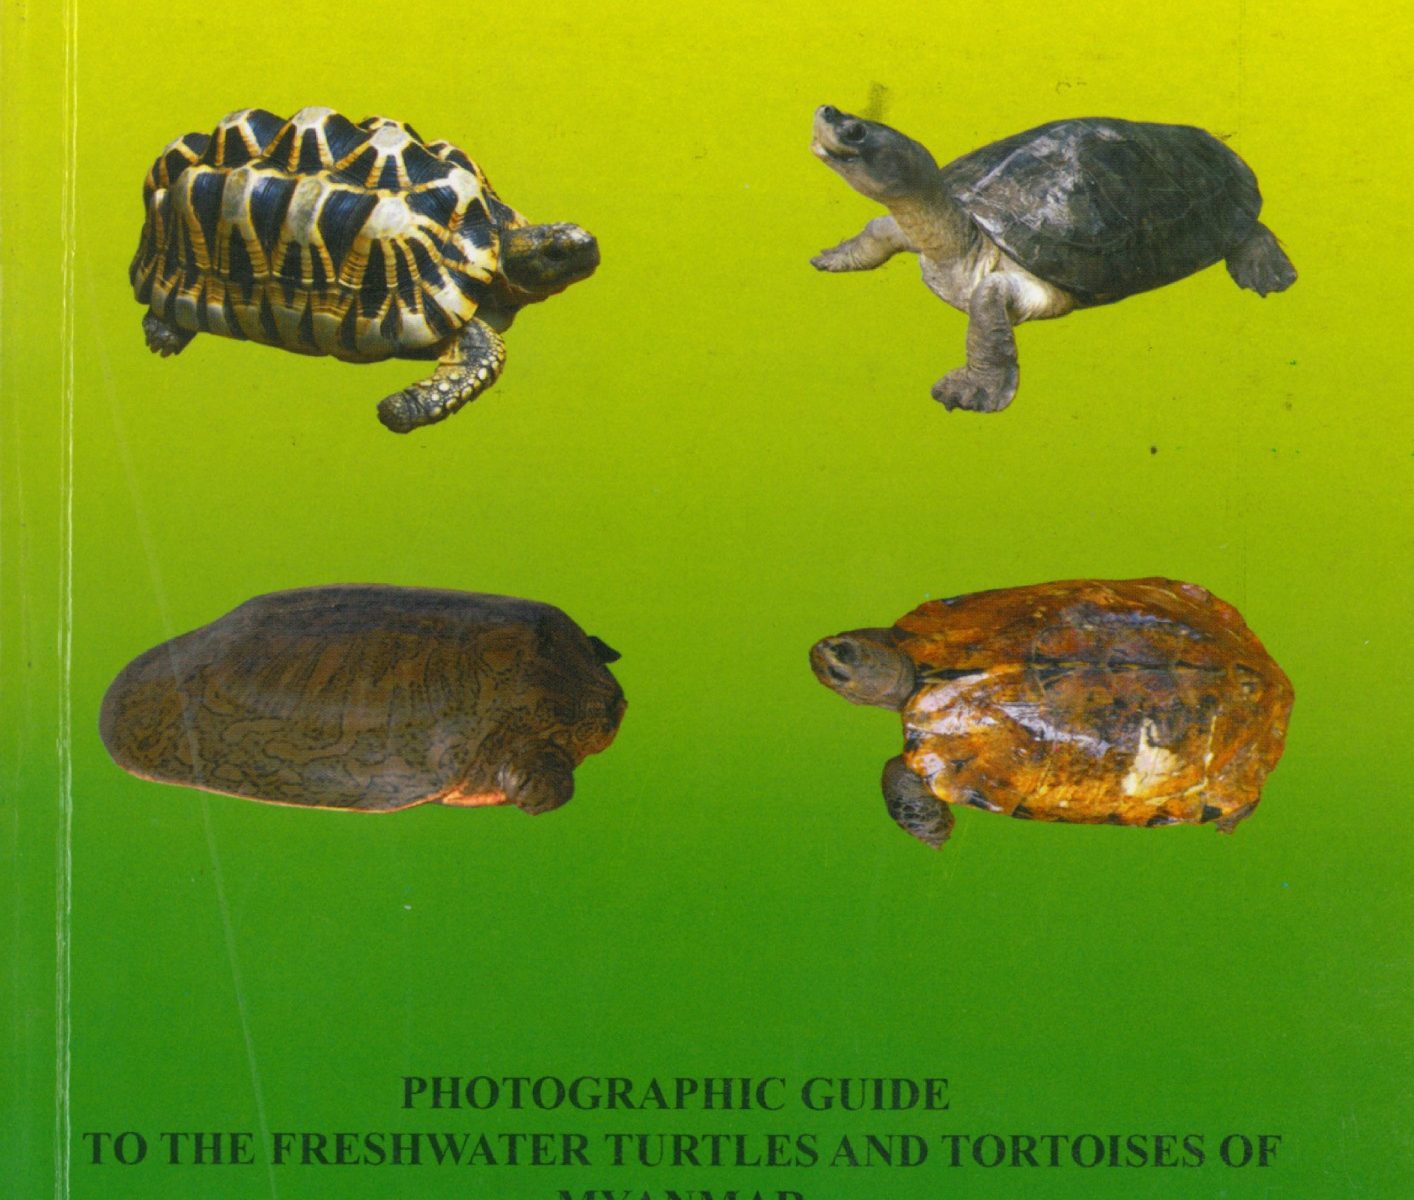 New Book Available On Myanmars Turtles Turtle Survival Alliance 